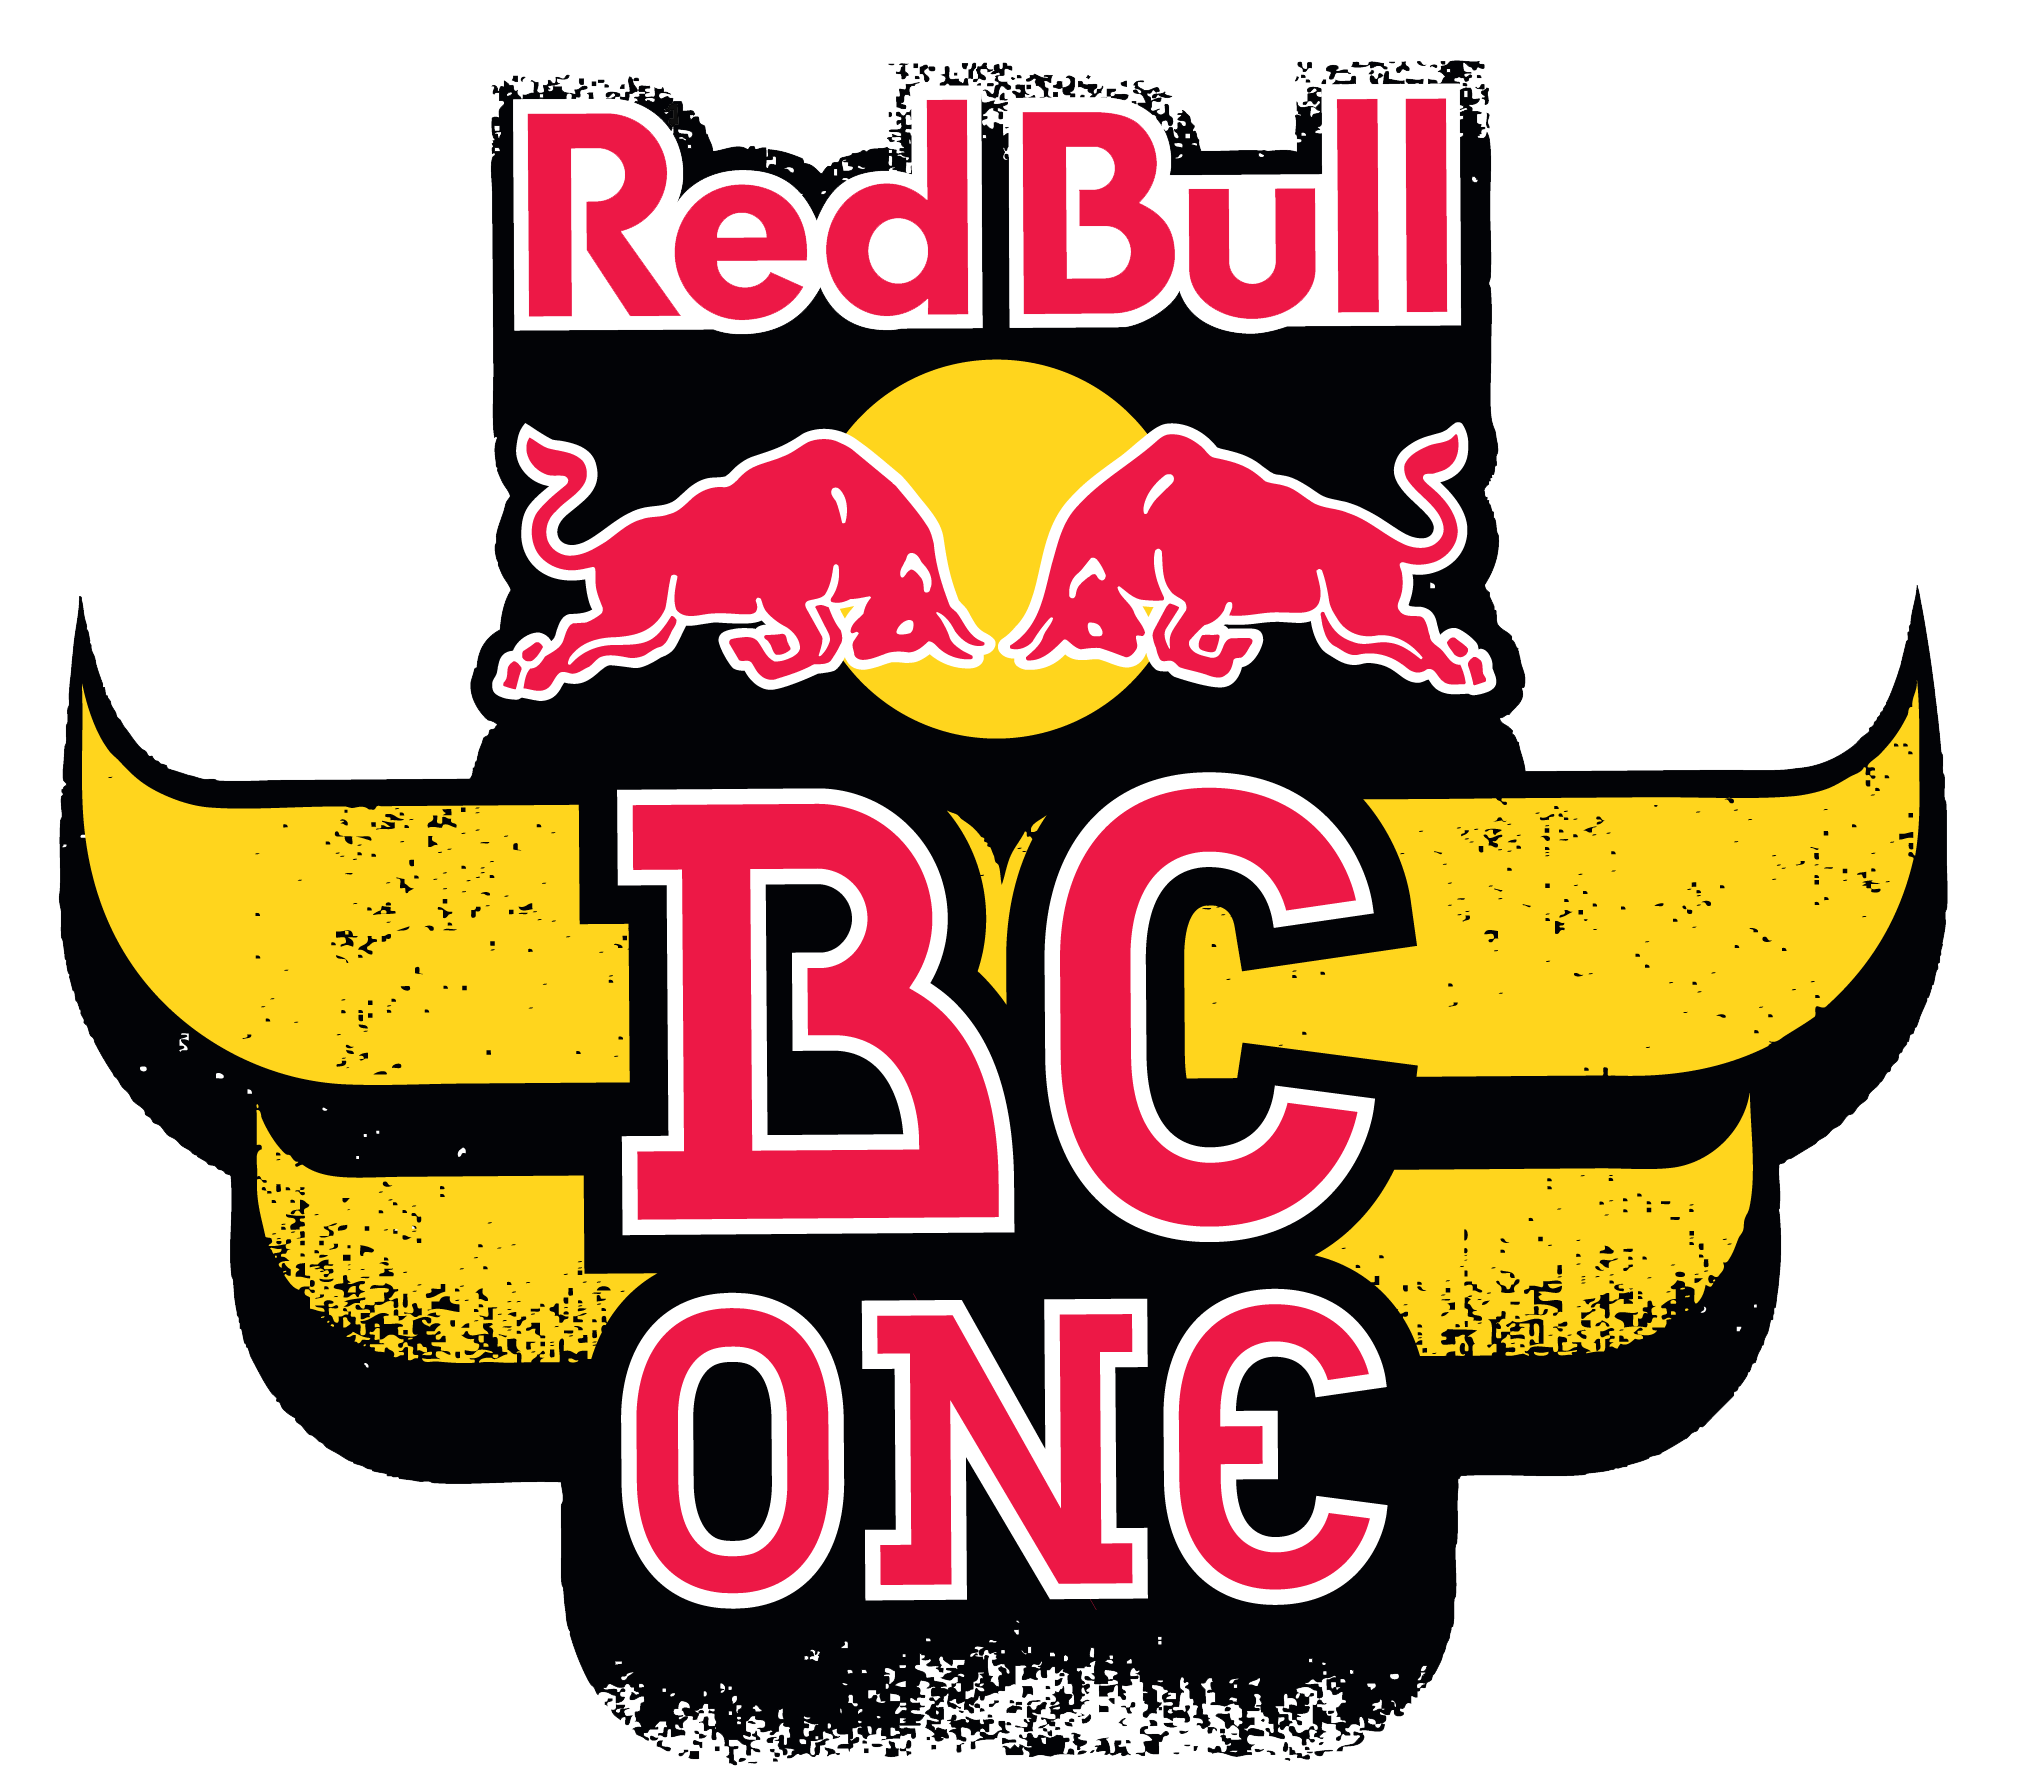 Red bull bc one. Брейк данс ред Булл. Red bull логотип. Логотип ред Булл брейк данс.